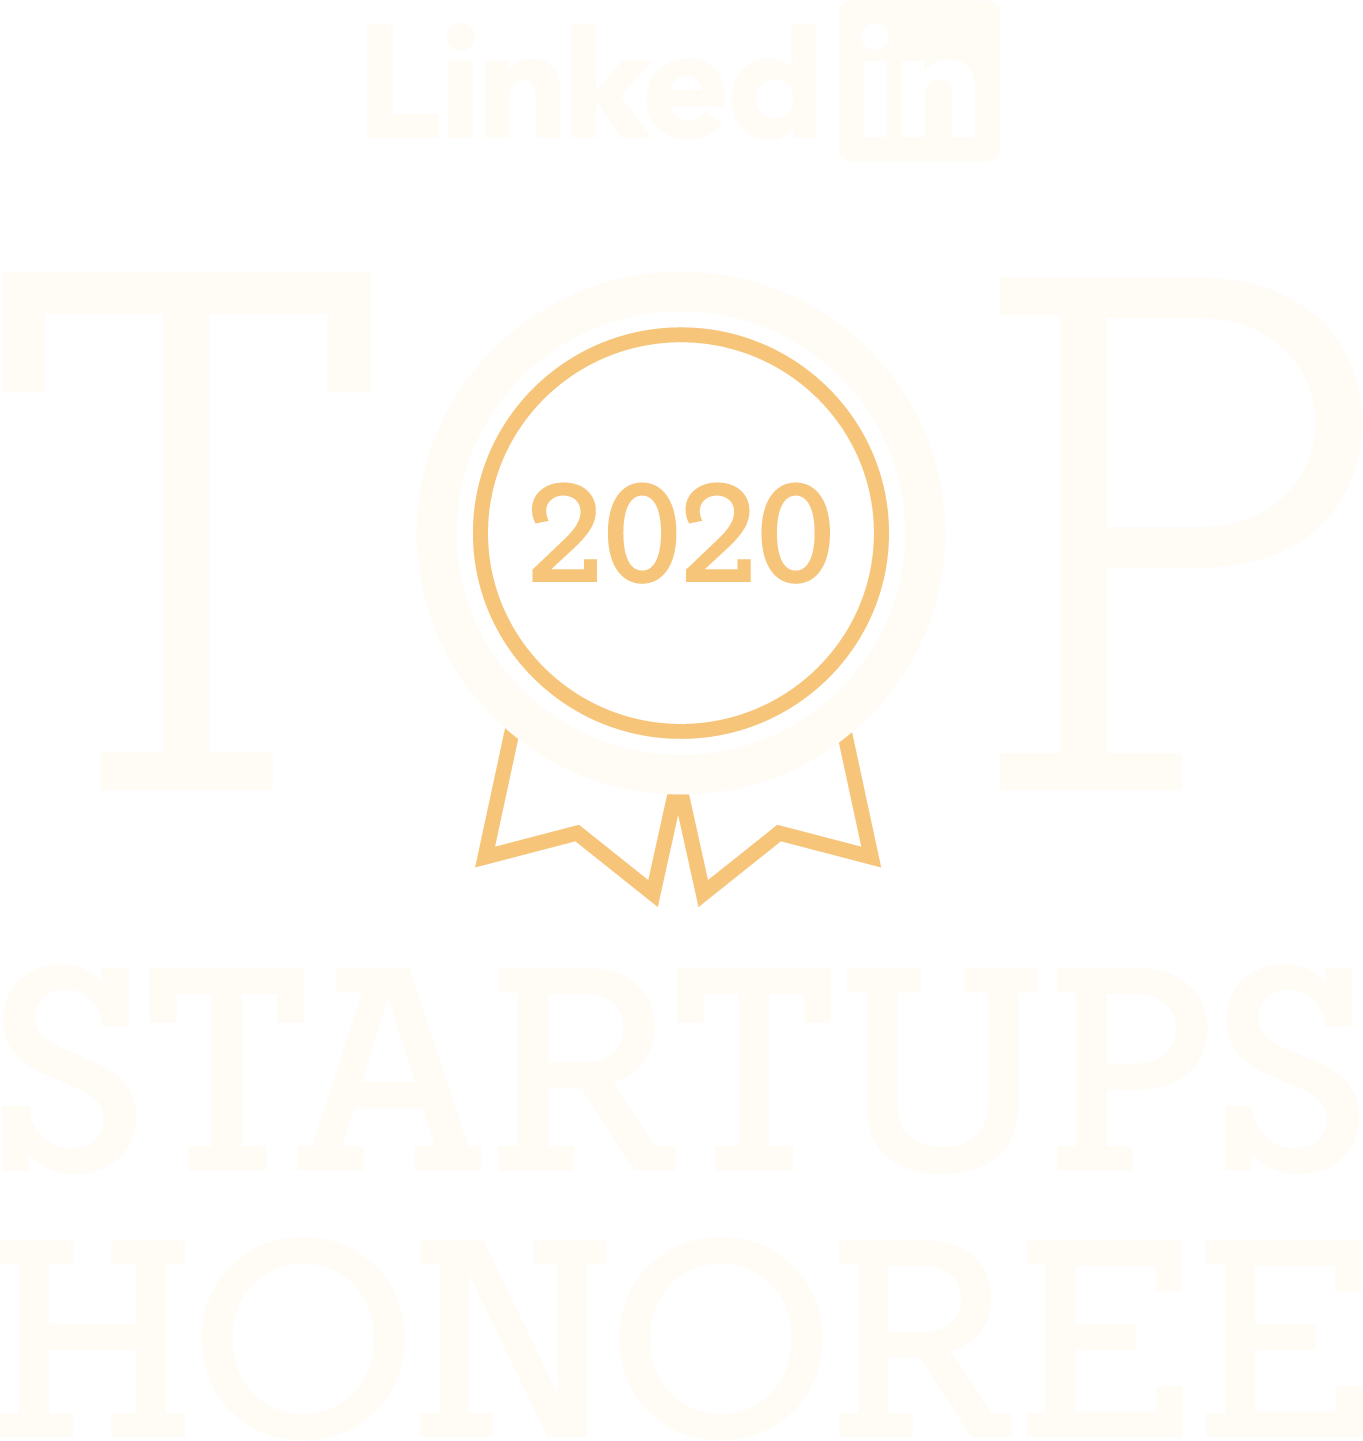 Linkedin Top Start-ups honoree logo